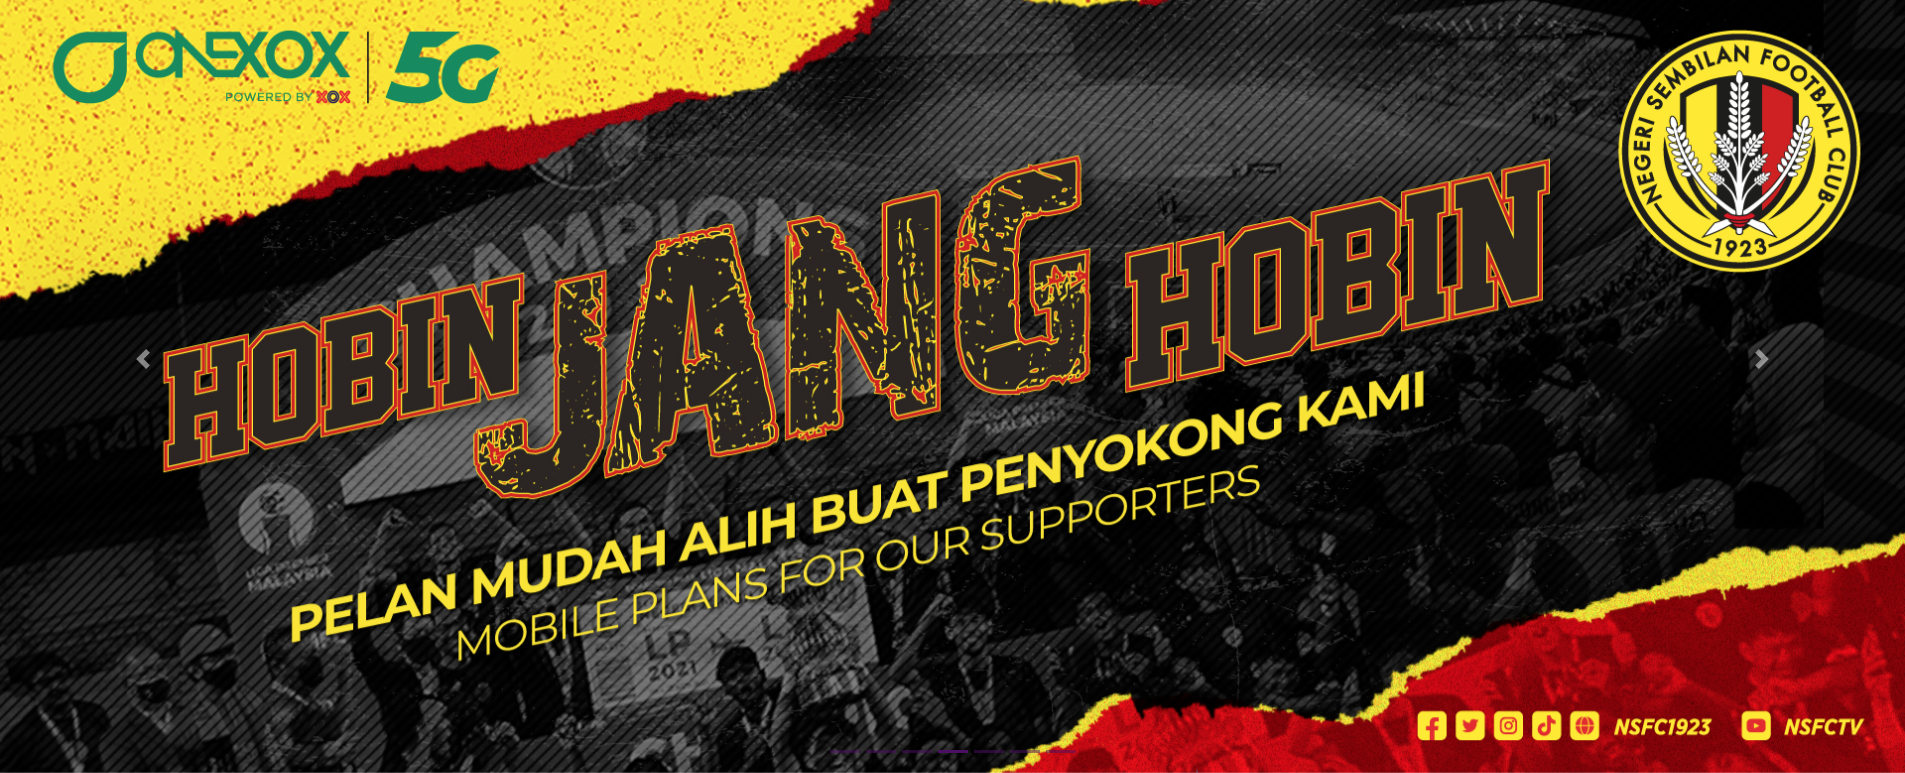 Onexox Negeri Sembilan FC Edition - Hobin  Jang Hobin